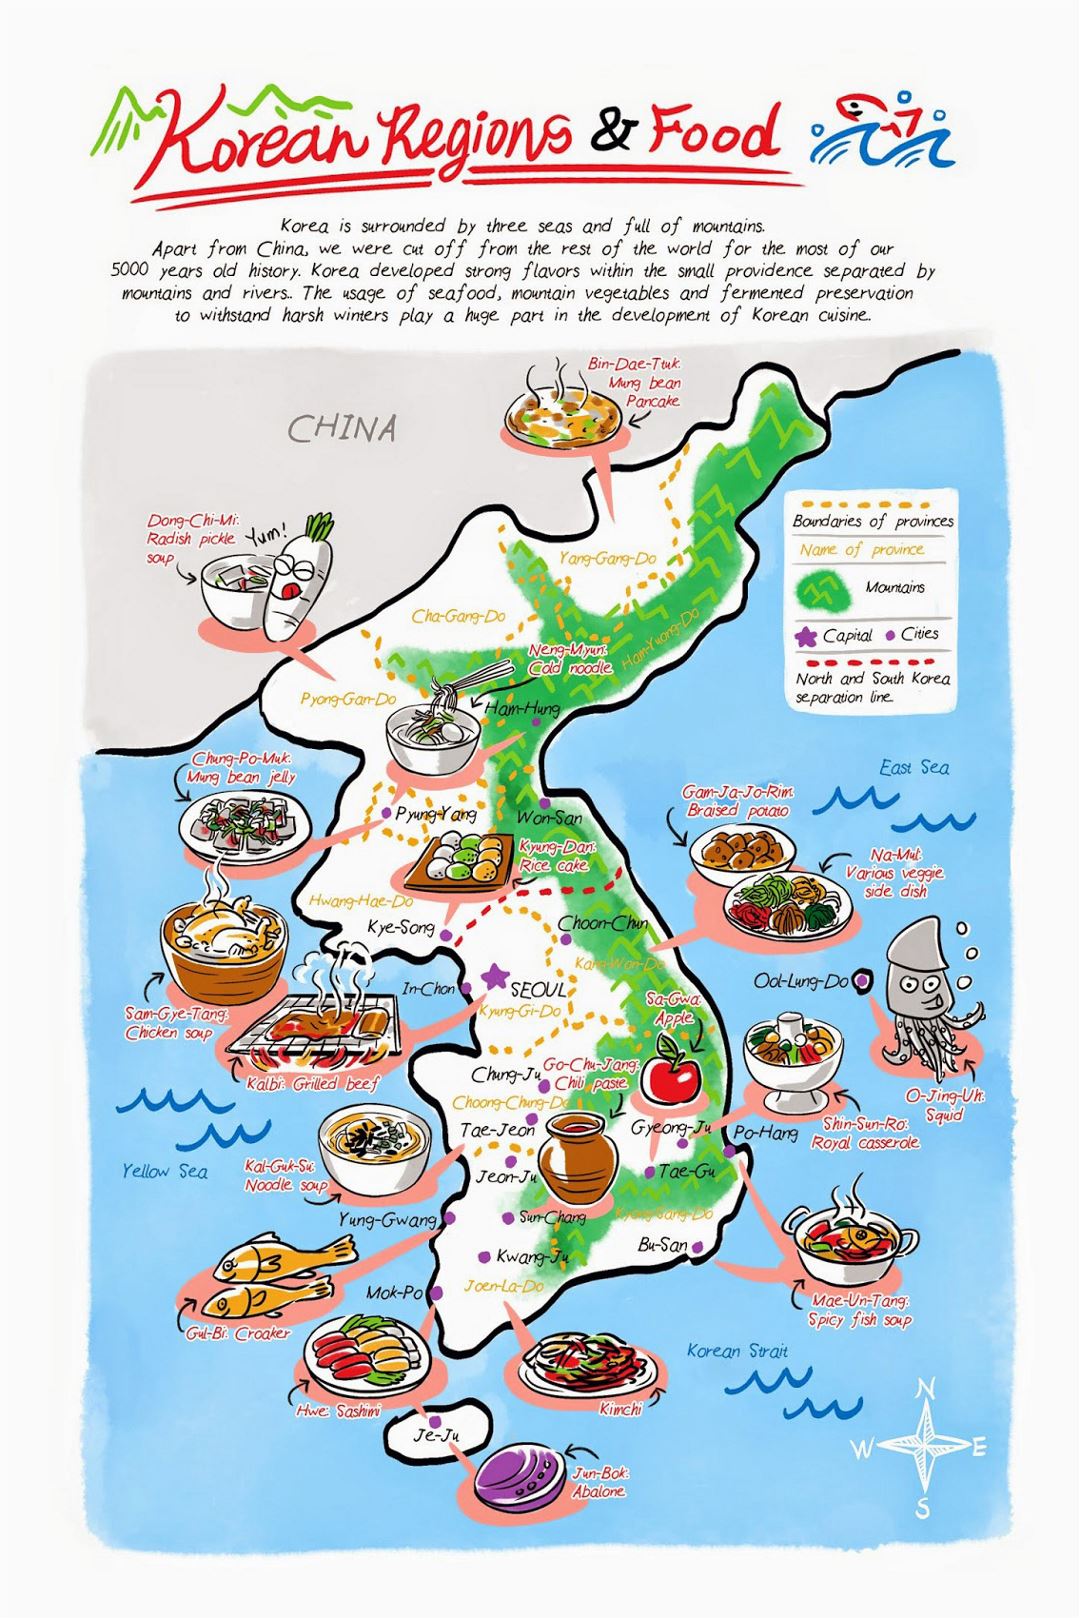 Detailed Korean Food Regions illustrated map